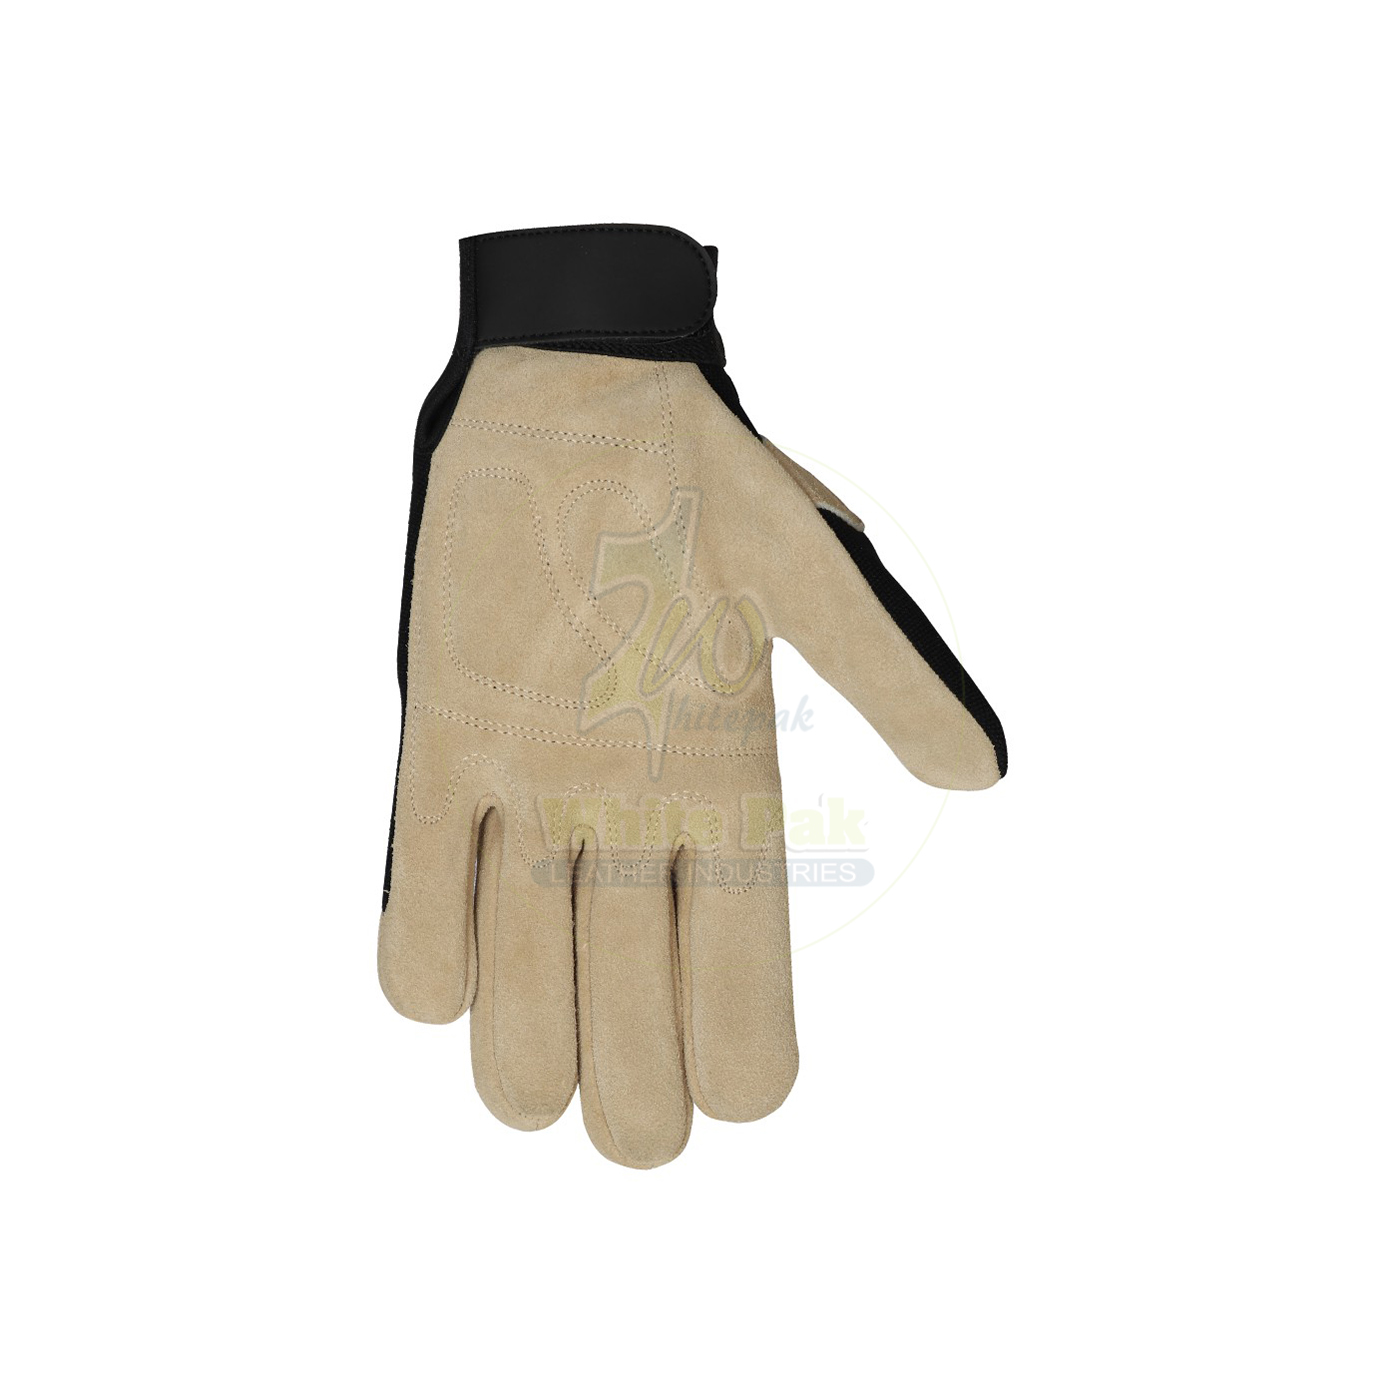 General Purpose Mechanics Gloves